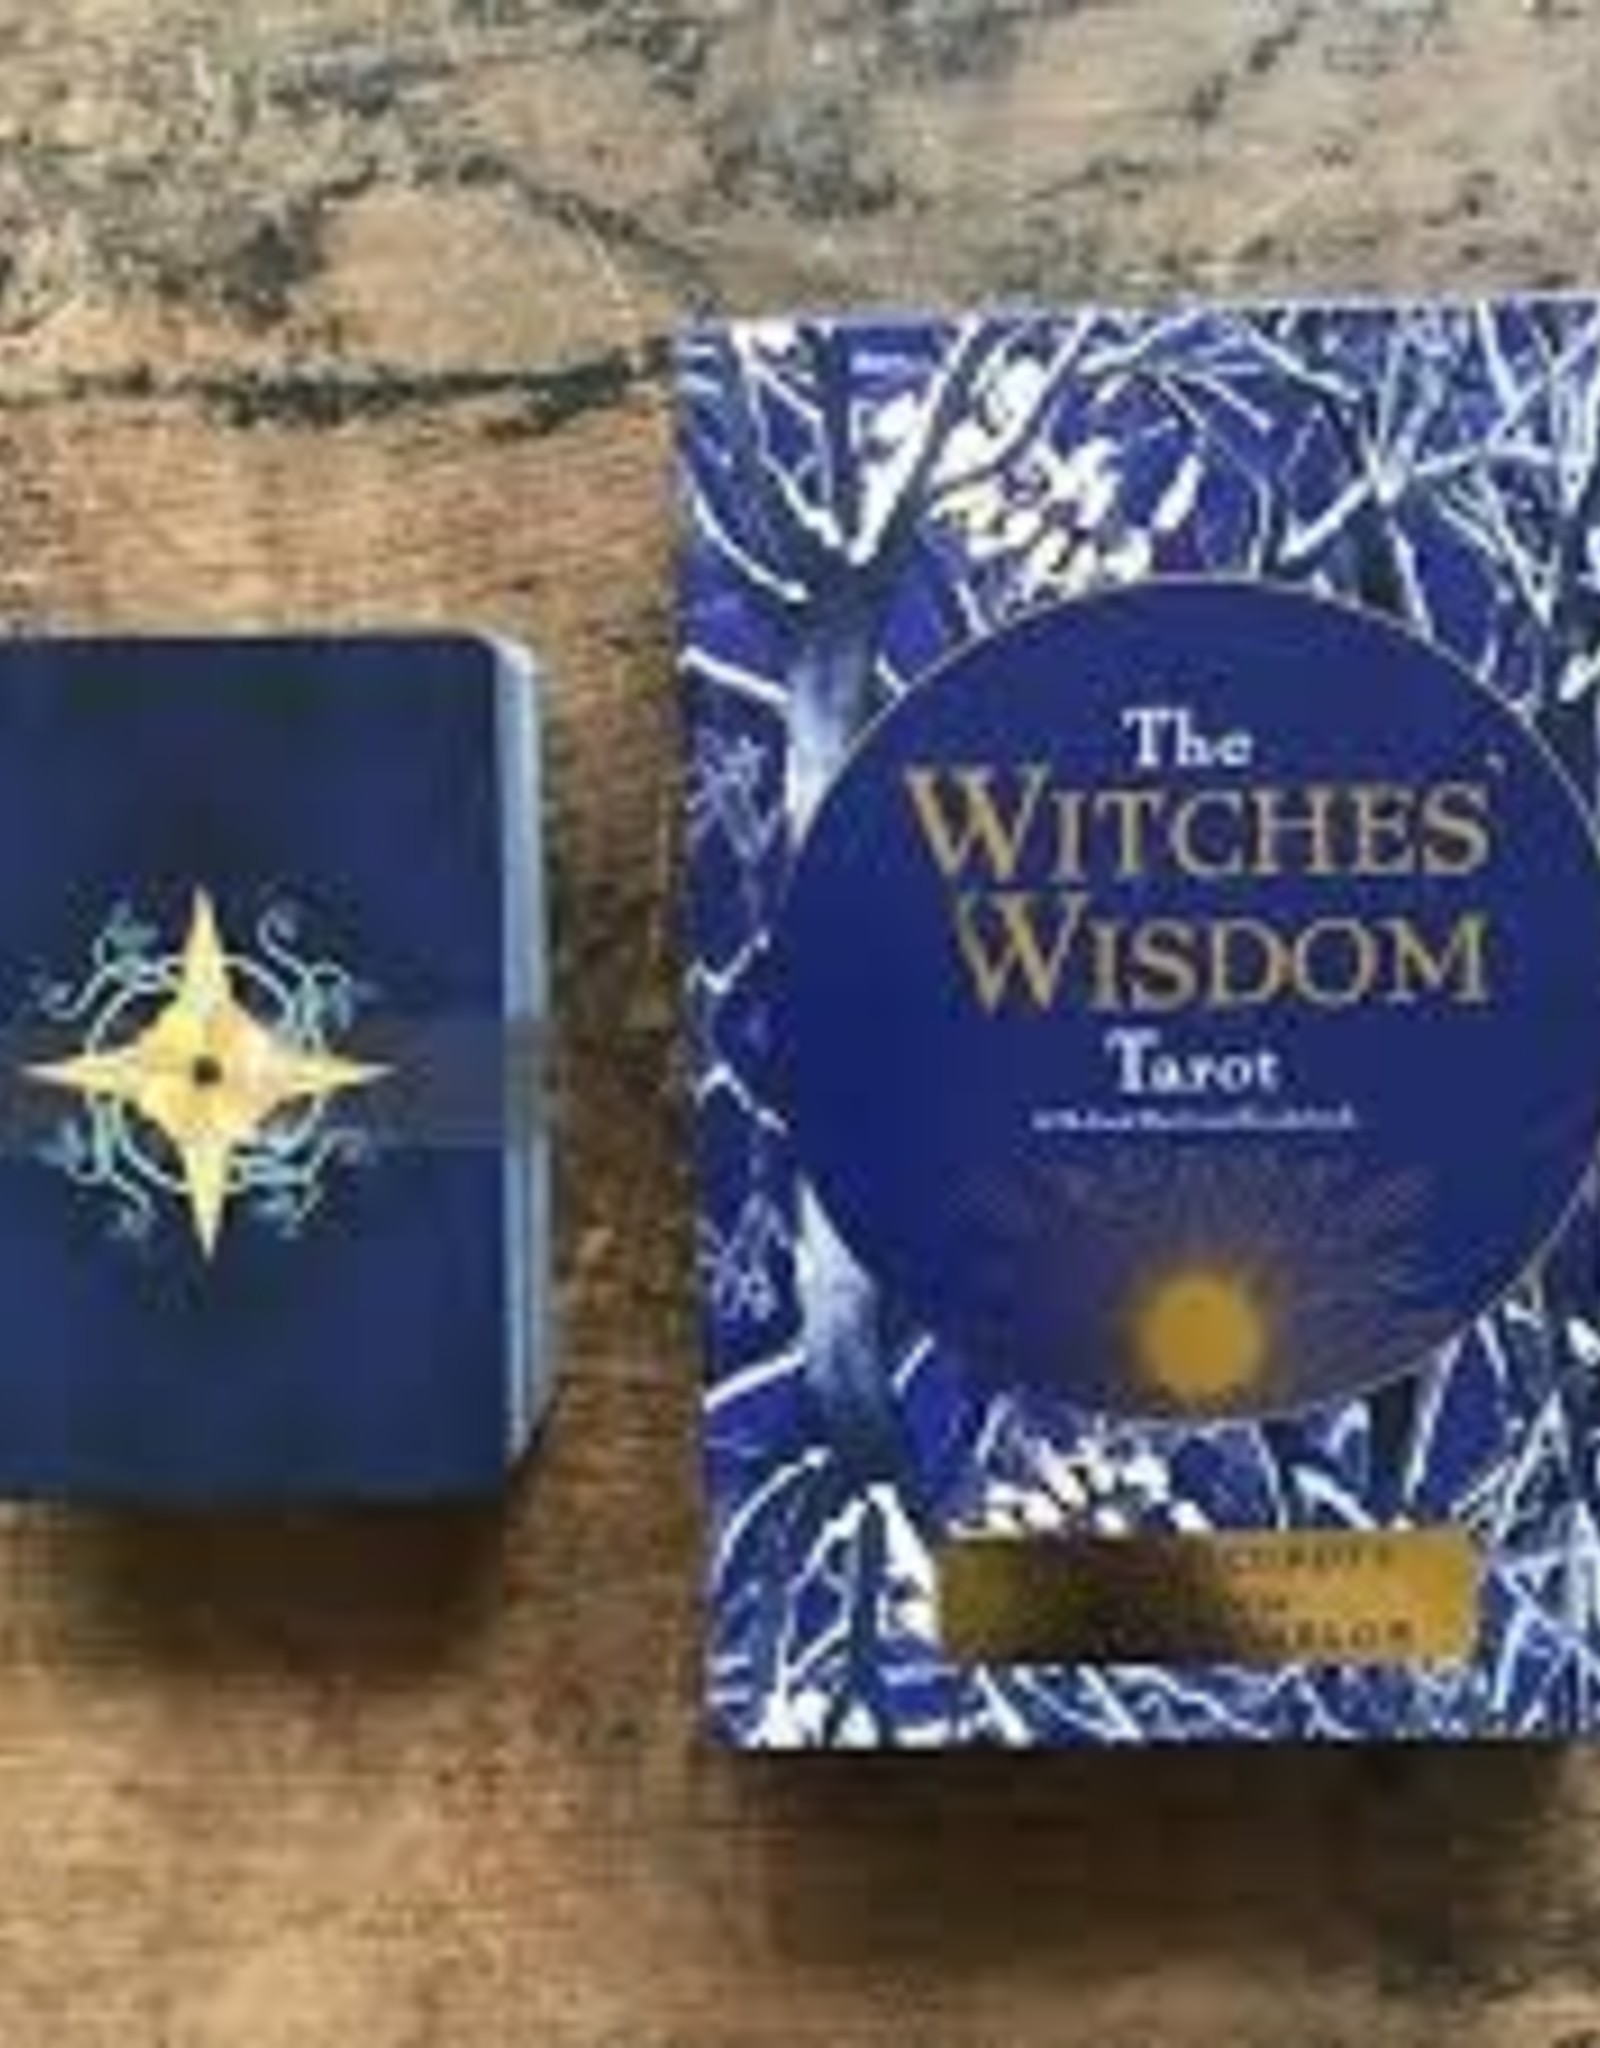 Phyllis Curott Witches Wisdom Tarot by Phyllis Curott